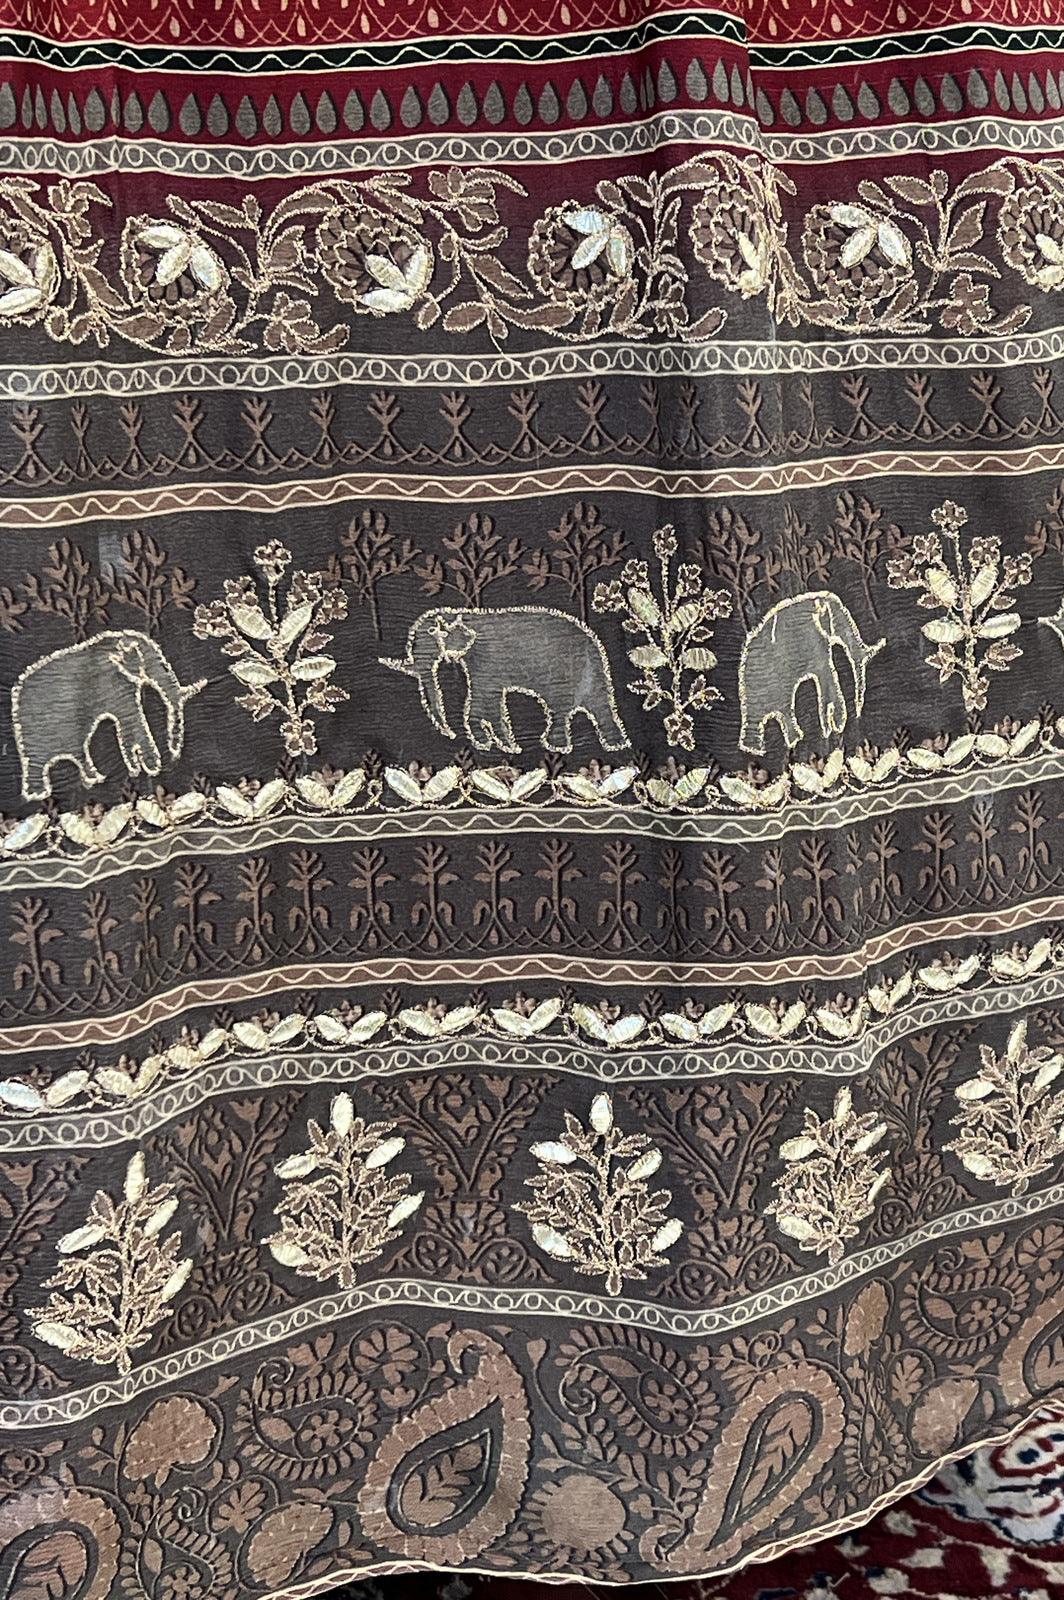 Maroon with Grey Shaded Digital Print, Thread and Beads work Floor Length Anarkali Suit - Seasons Chennai